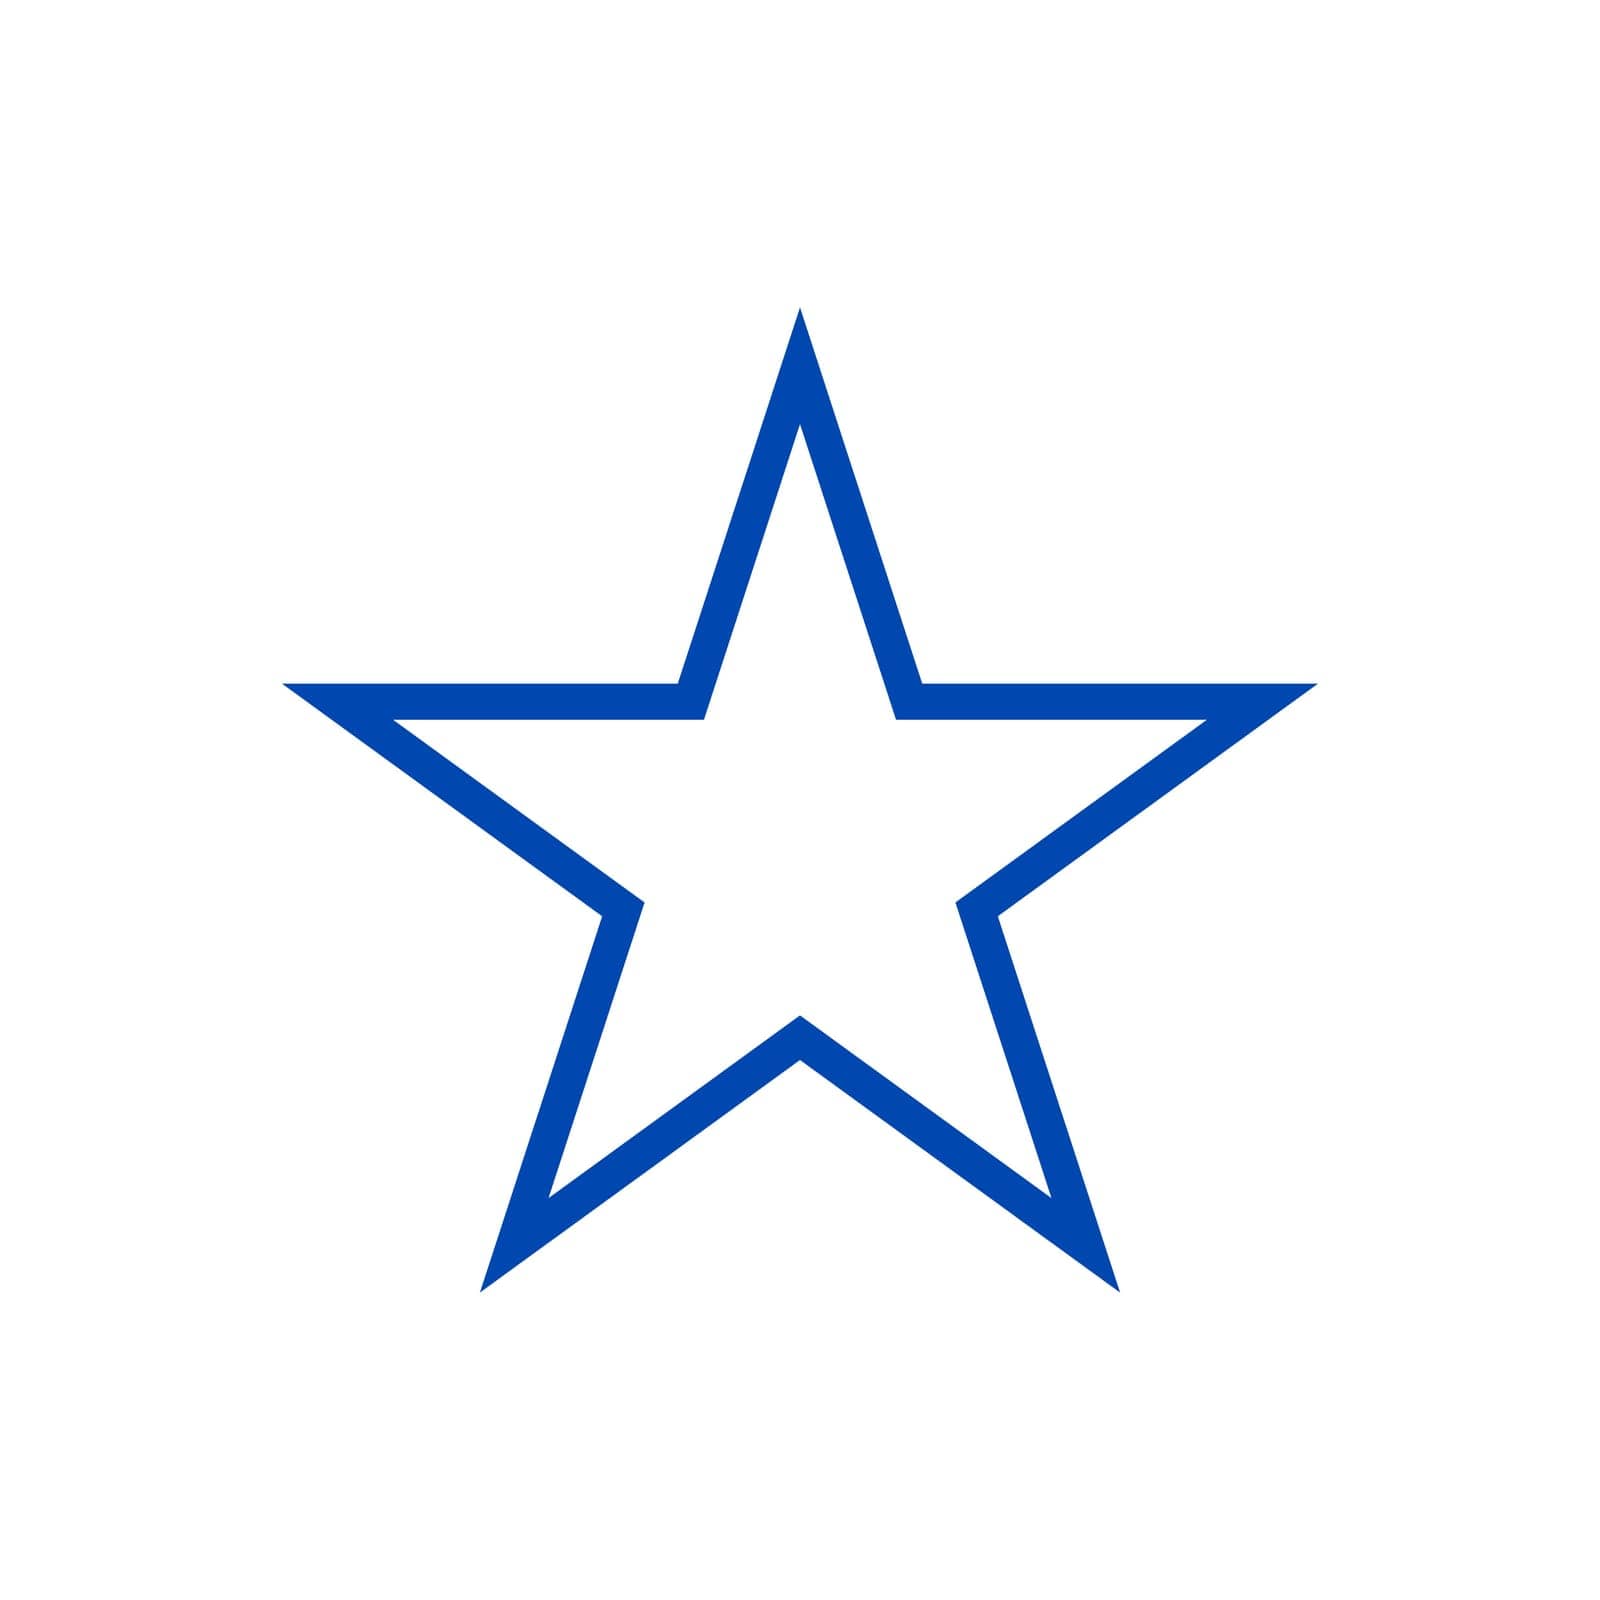 blue star astrological symbol